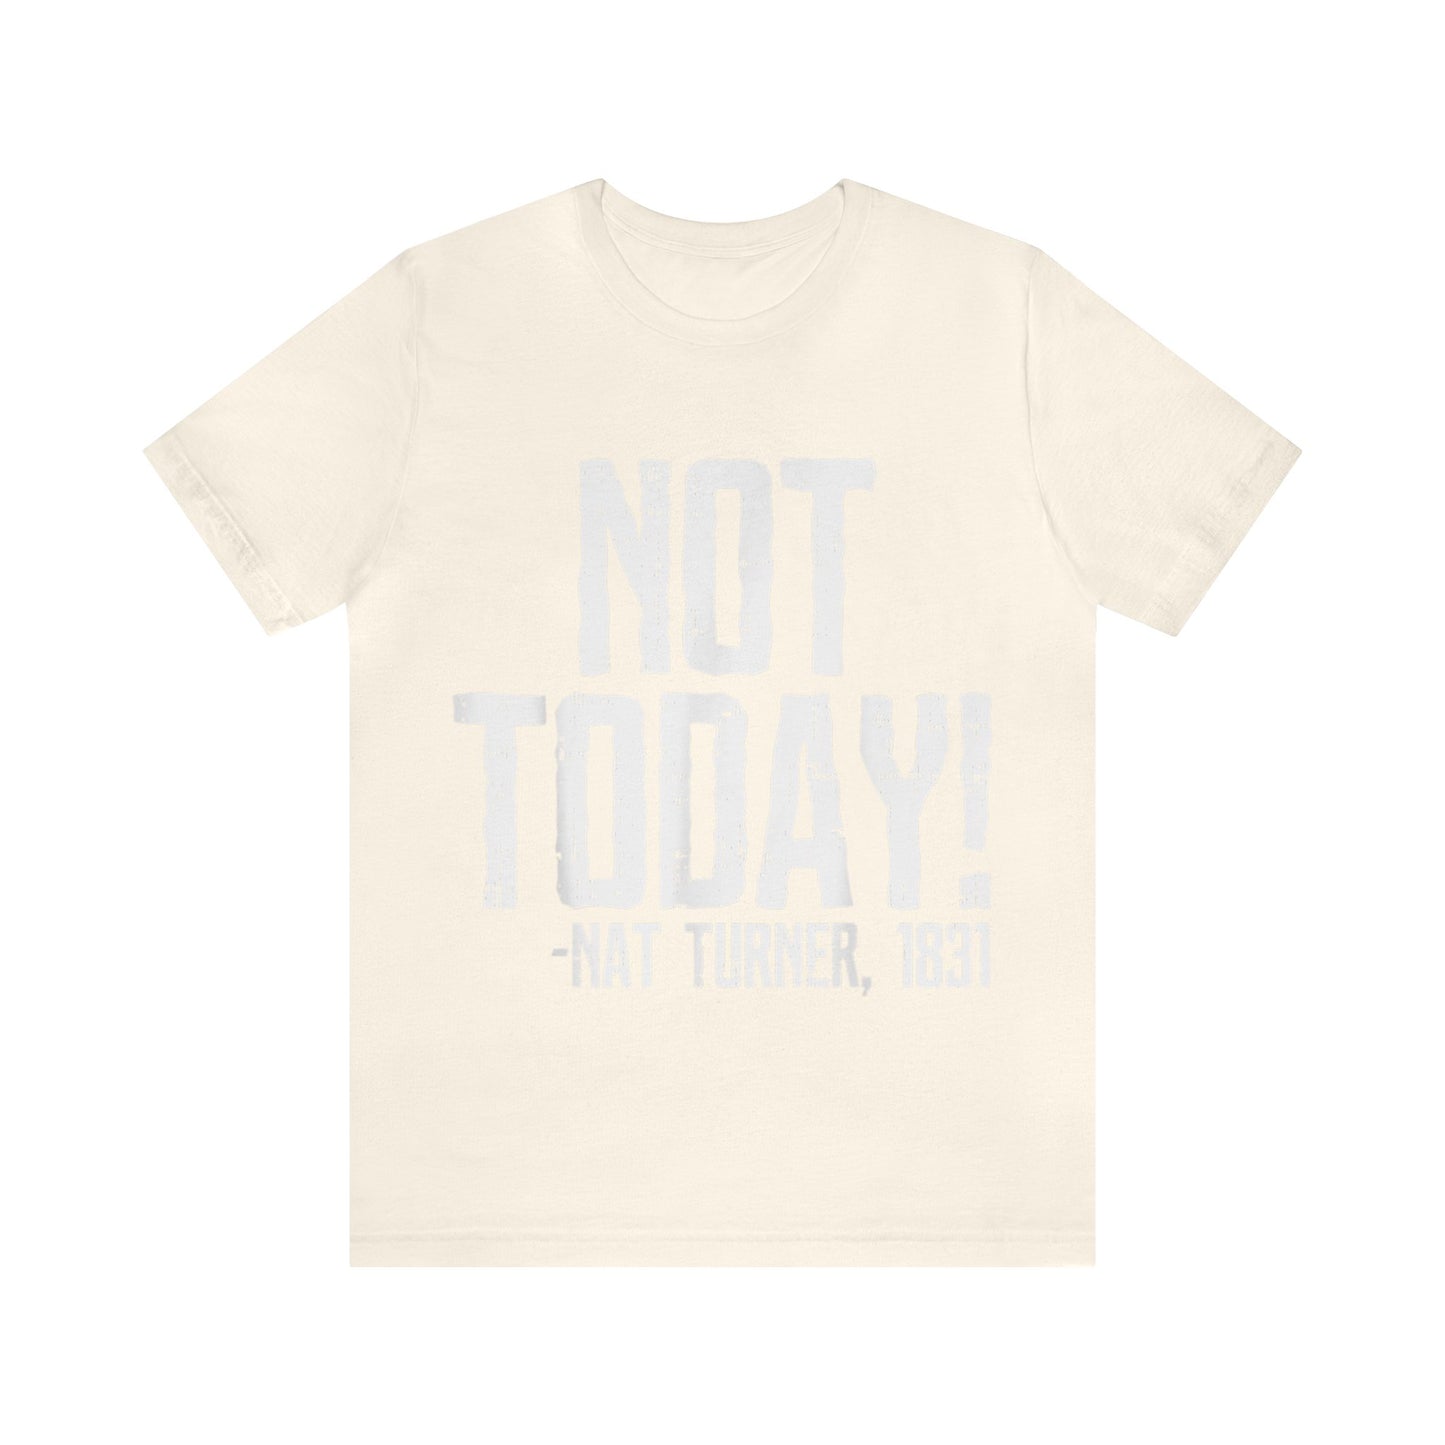 Not Today - Bella Canvas -  Unisex Jersey Short Sleeve Tee